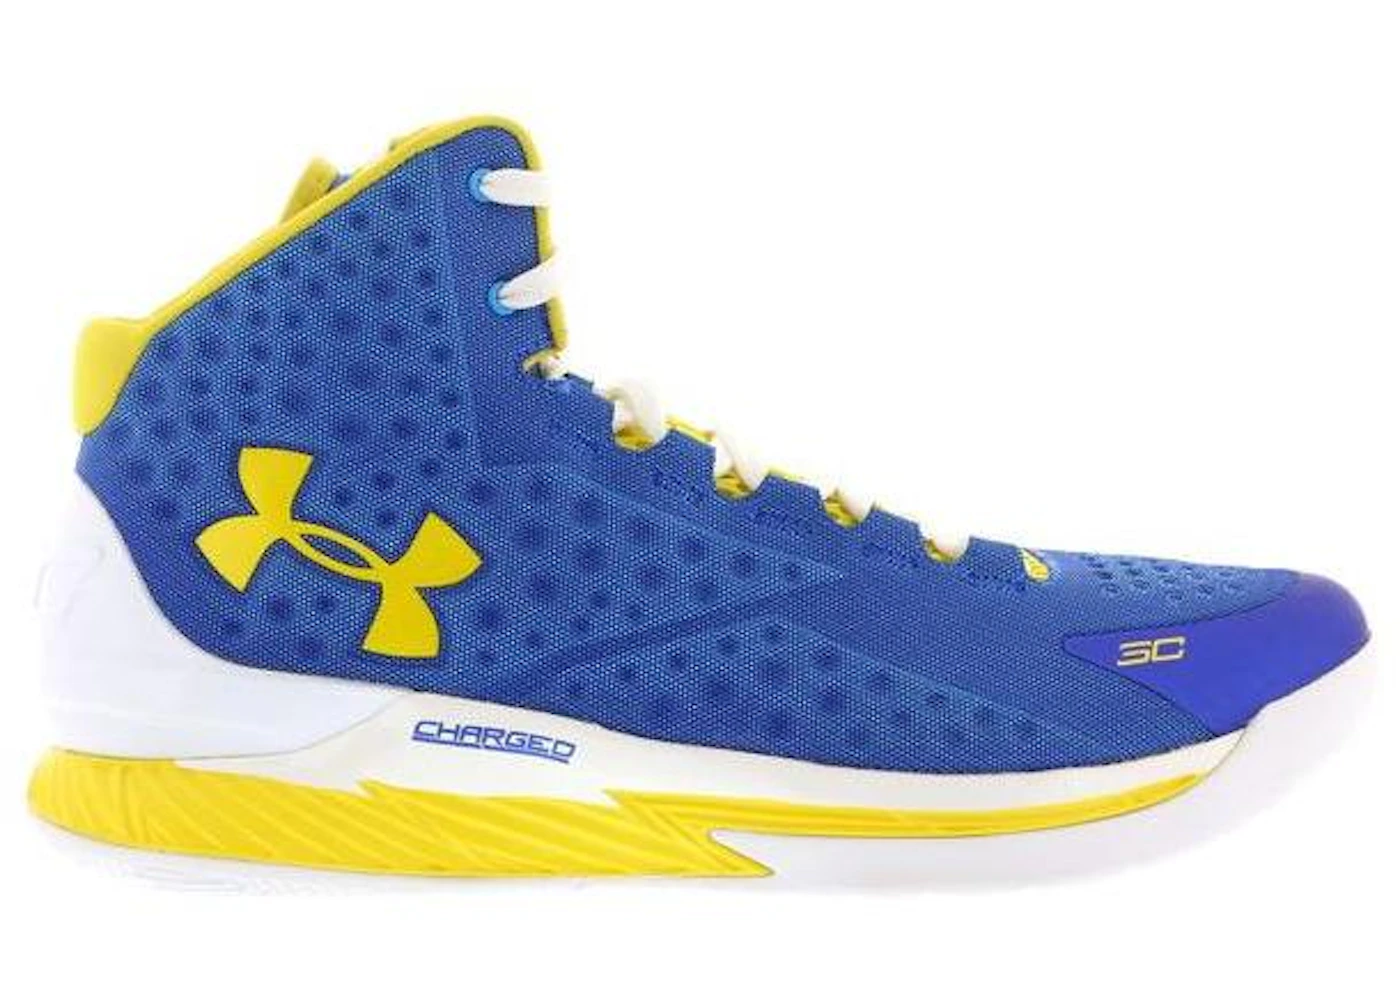 basketball curry shoe